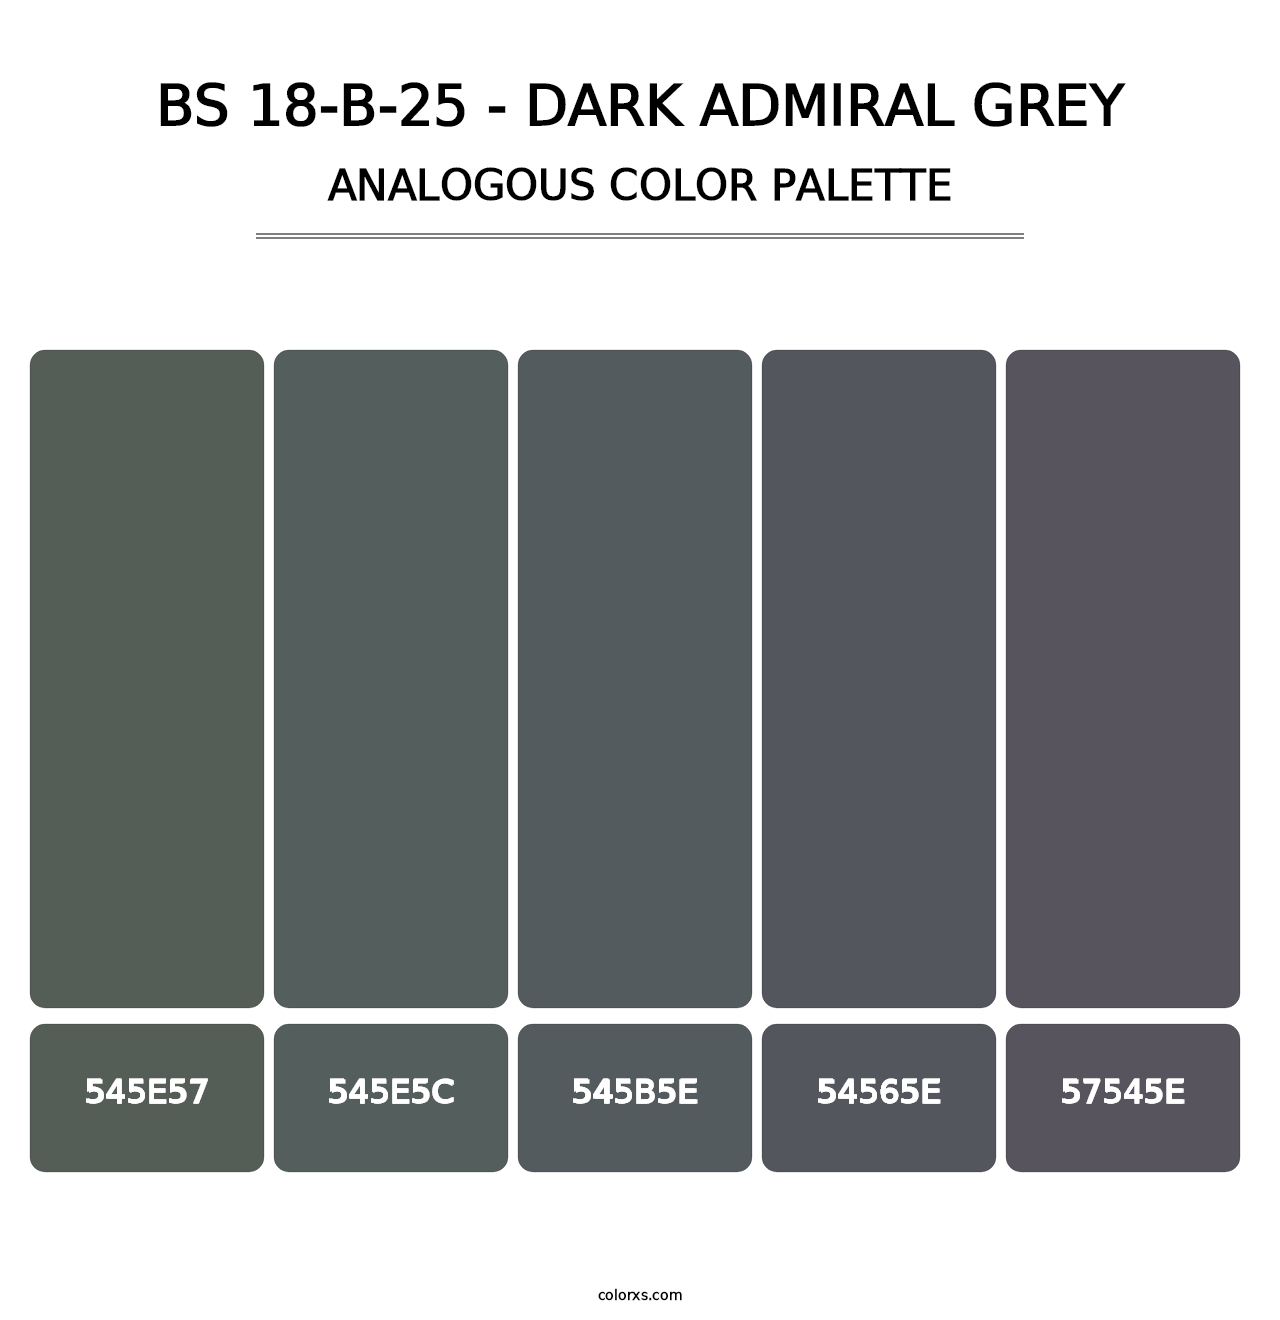 BS 18-B-25 - Dark Admiral Grey - Analogous Color Palette